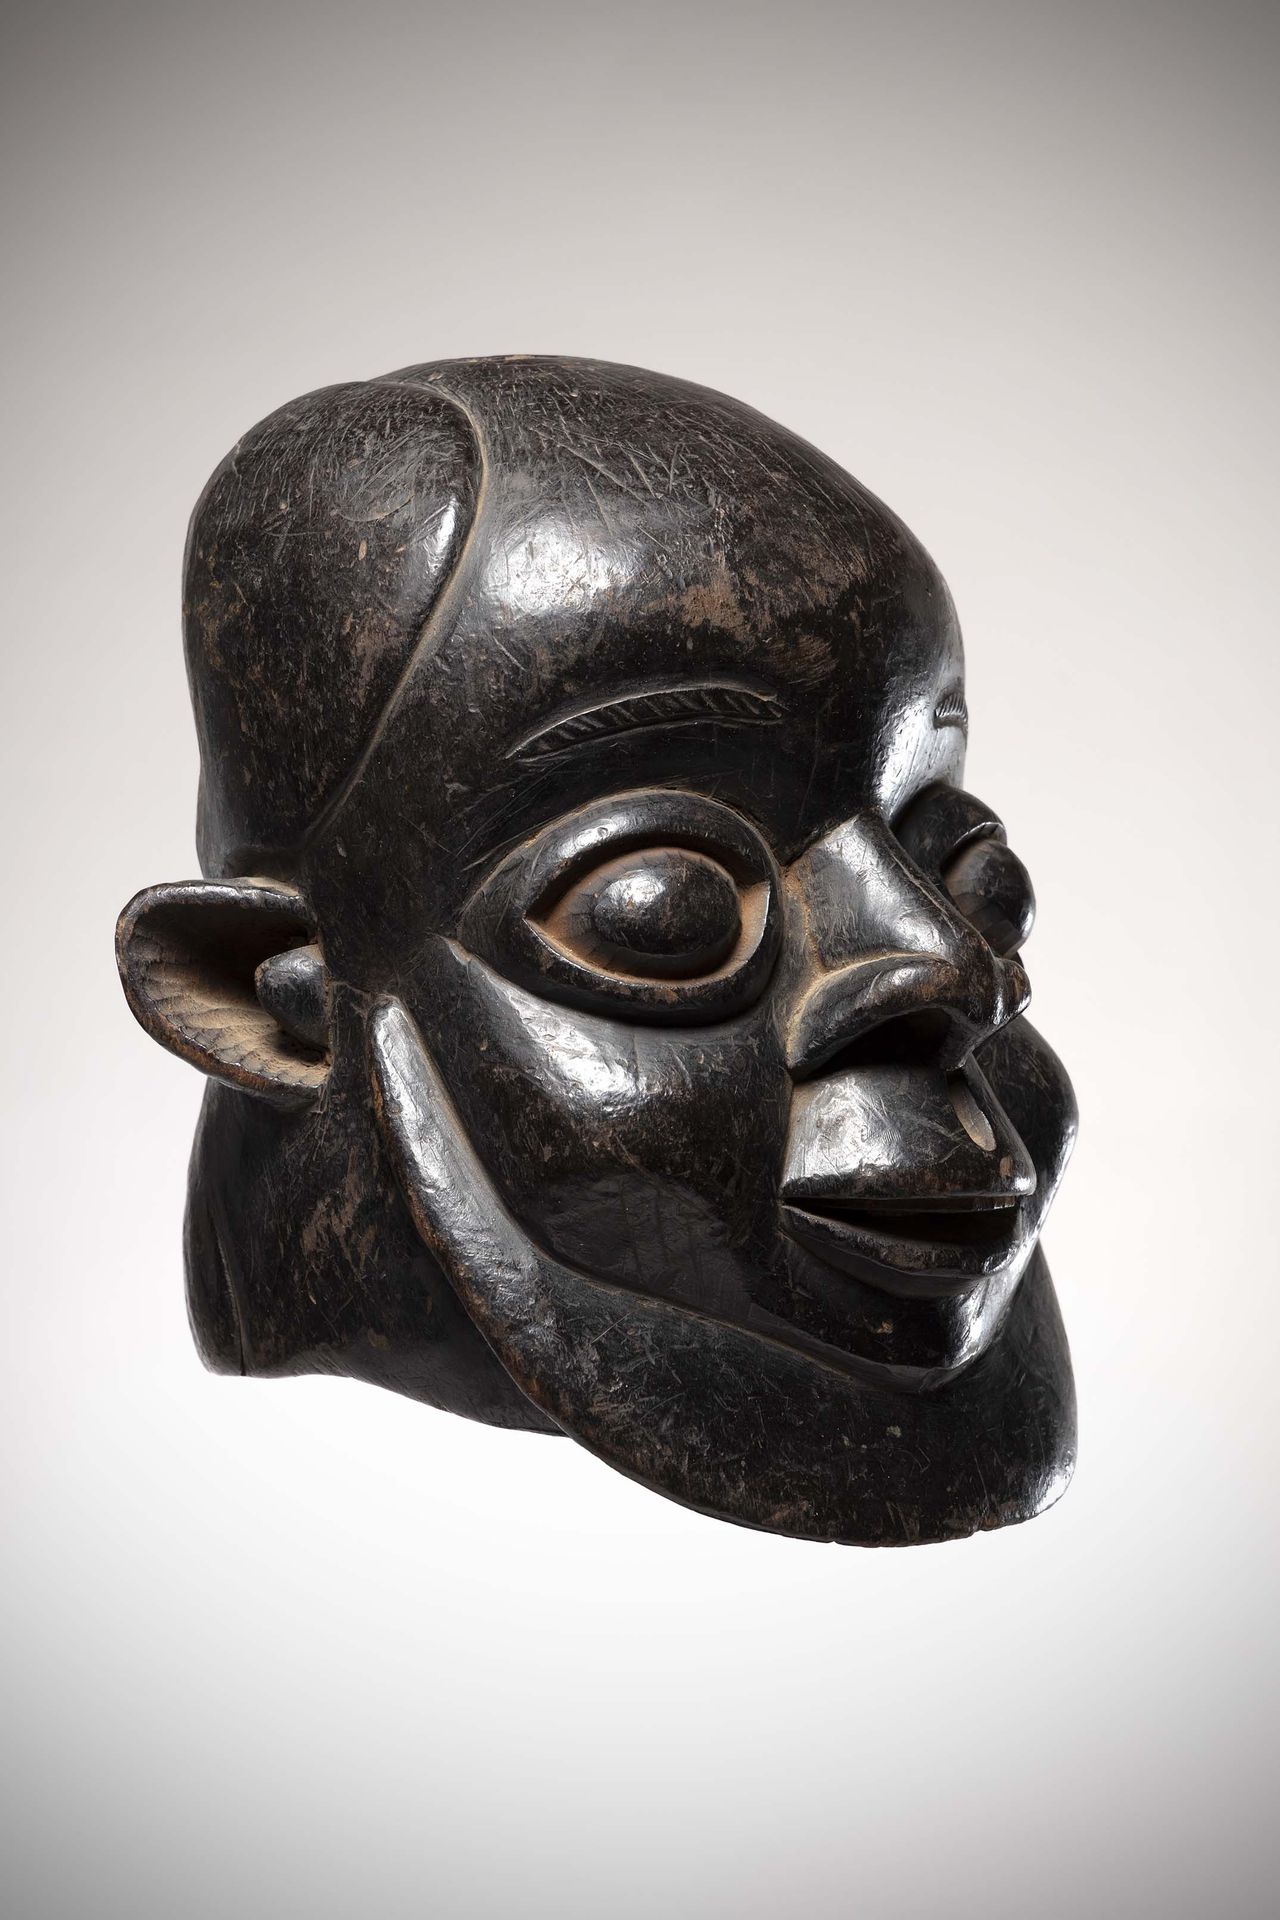 Null Békom

(Cameroun) Masque heaume masculin à profonde patine noire.

Dans les&hellip;